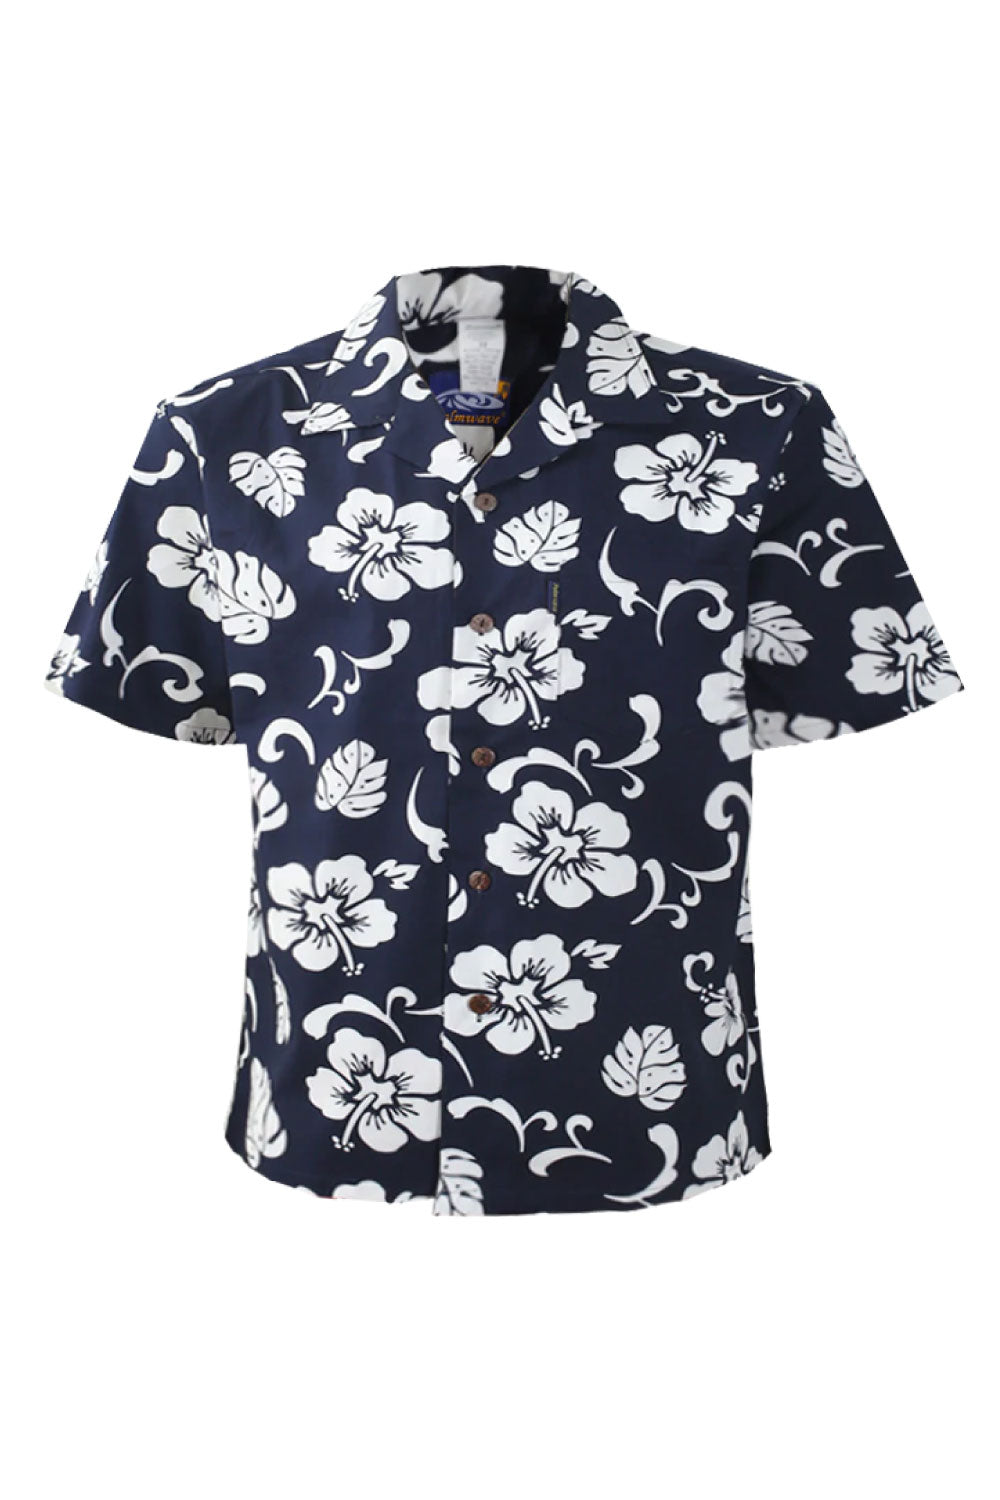 Image of the front of Palmwave's Navy Hibiscus Aloha Men's Shirt.